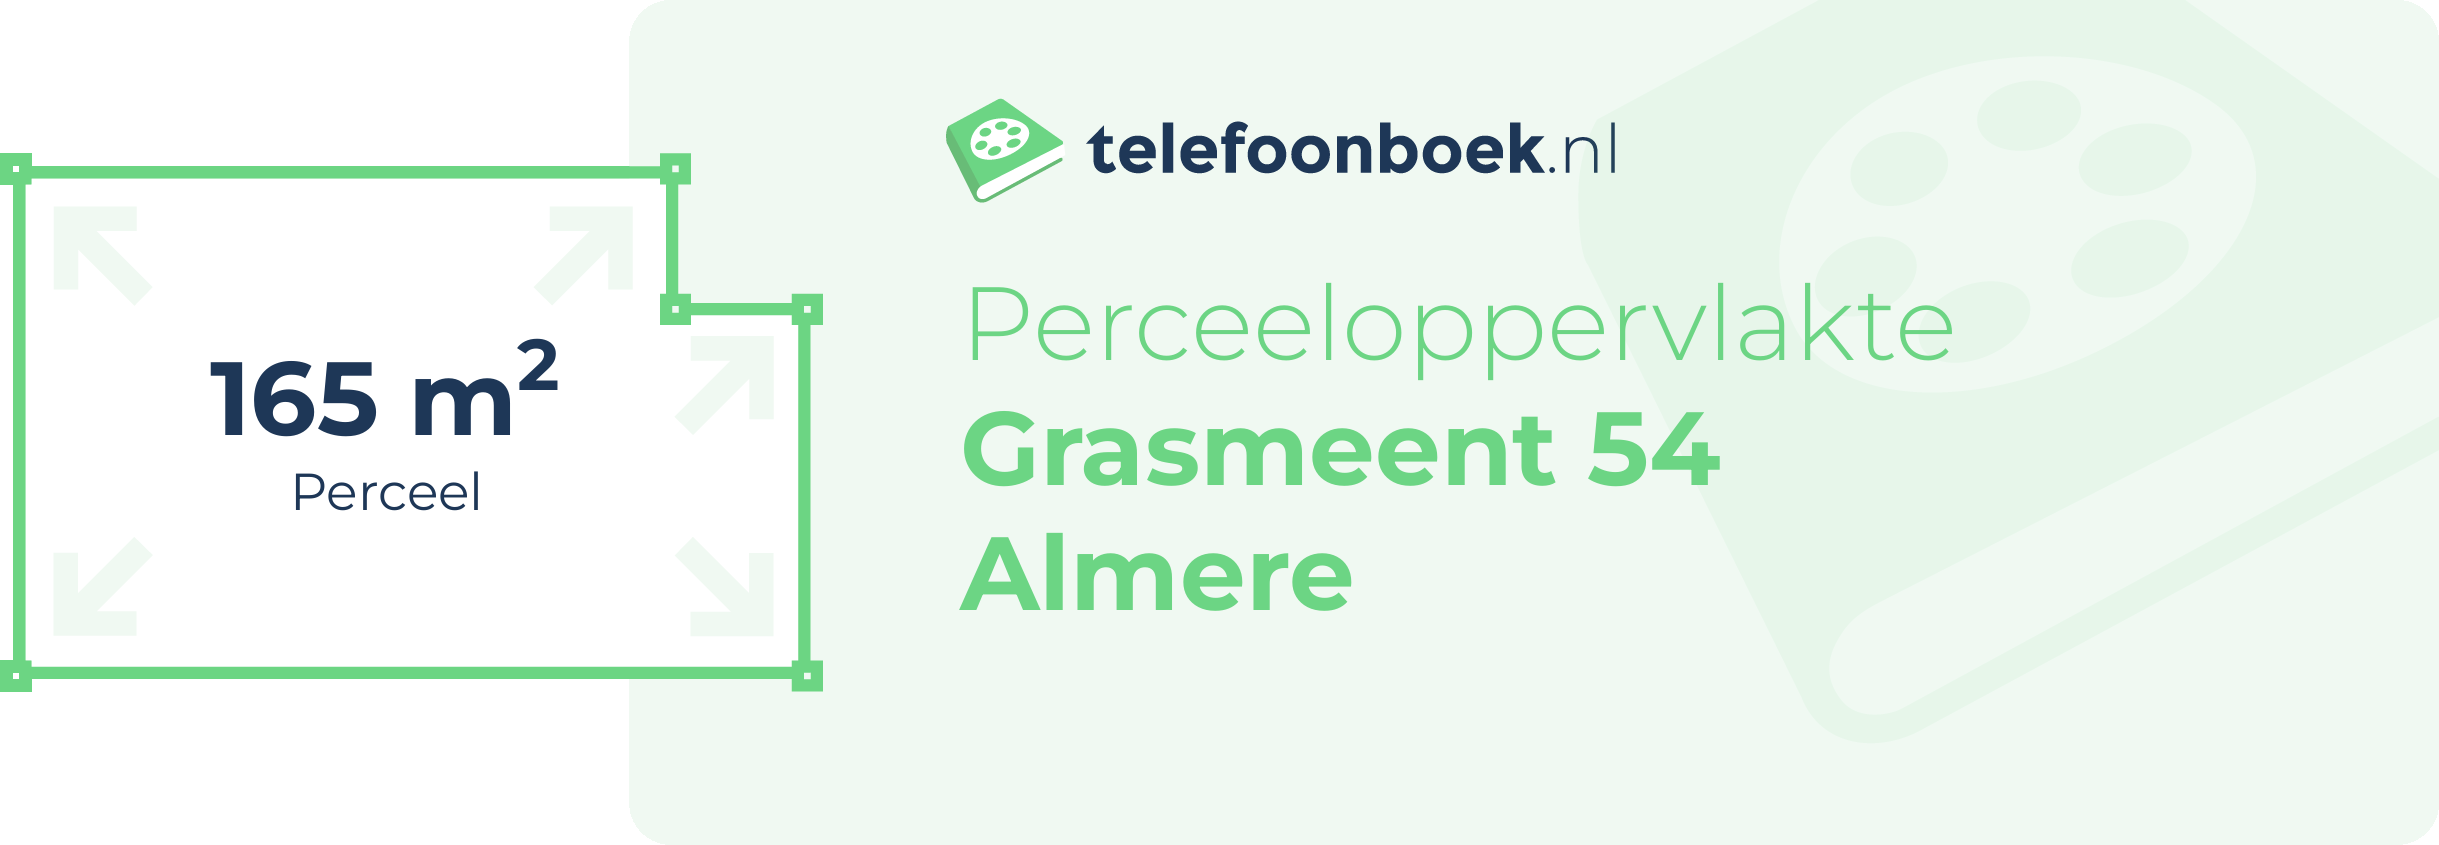 Perceeloppervlakte Grasmeent 54 Almere